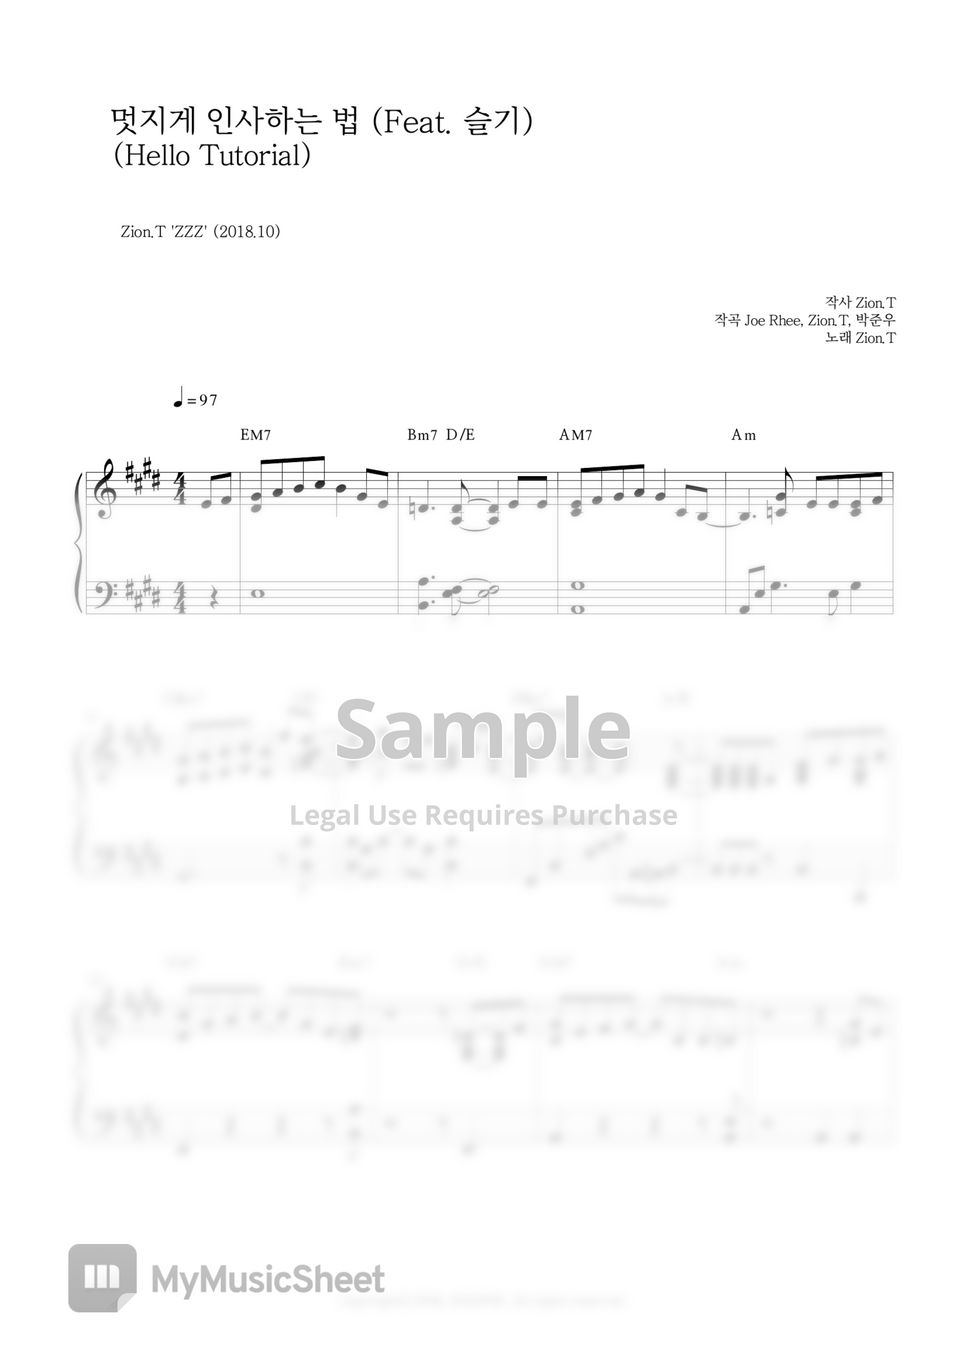 Zion.T '멋지게 인사하는 법(Hello Tutorial) (feat. Seulgi)' Piano Sheet Music